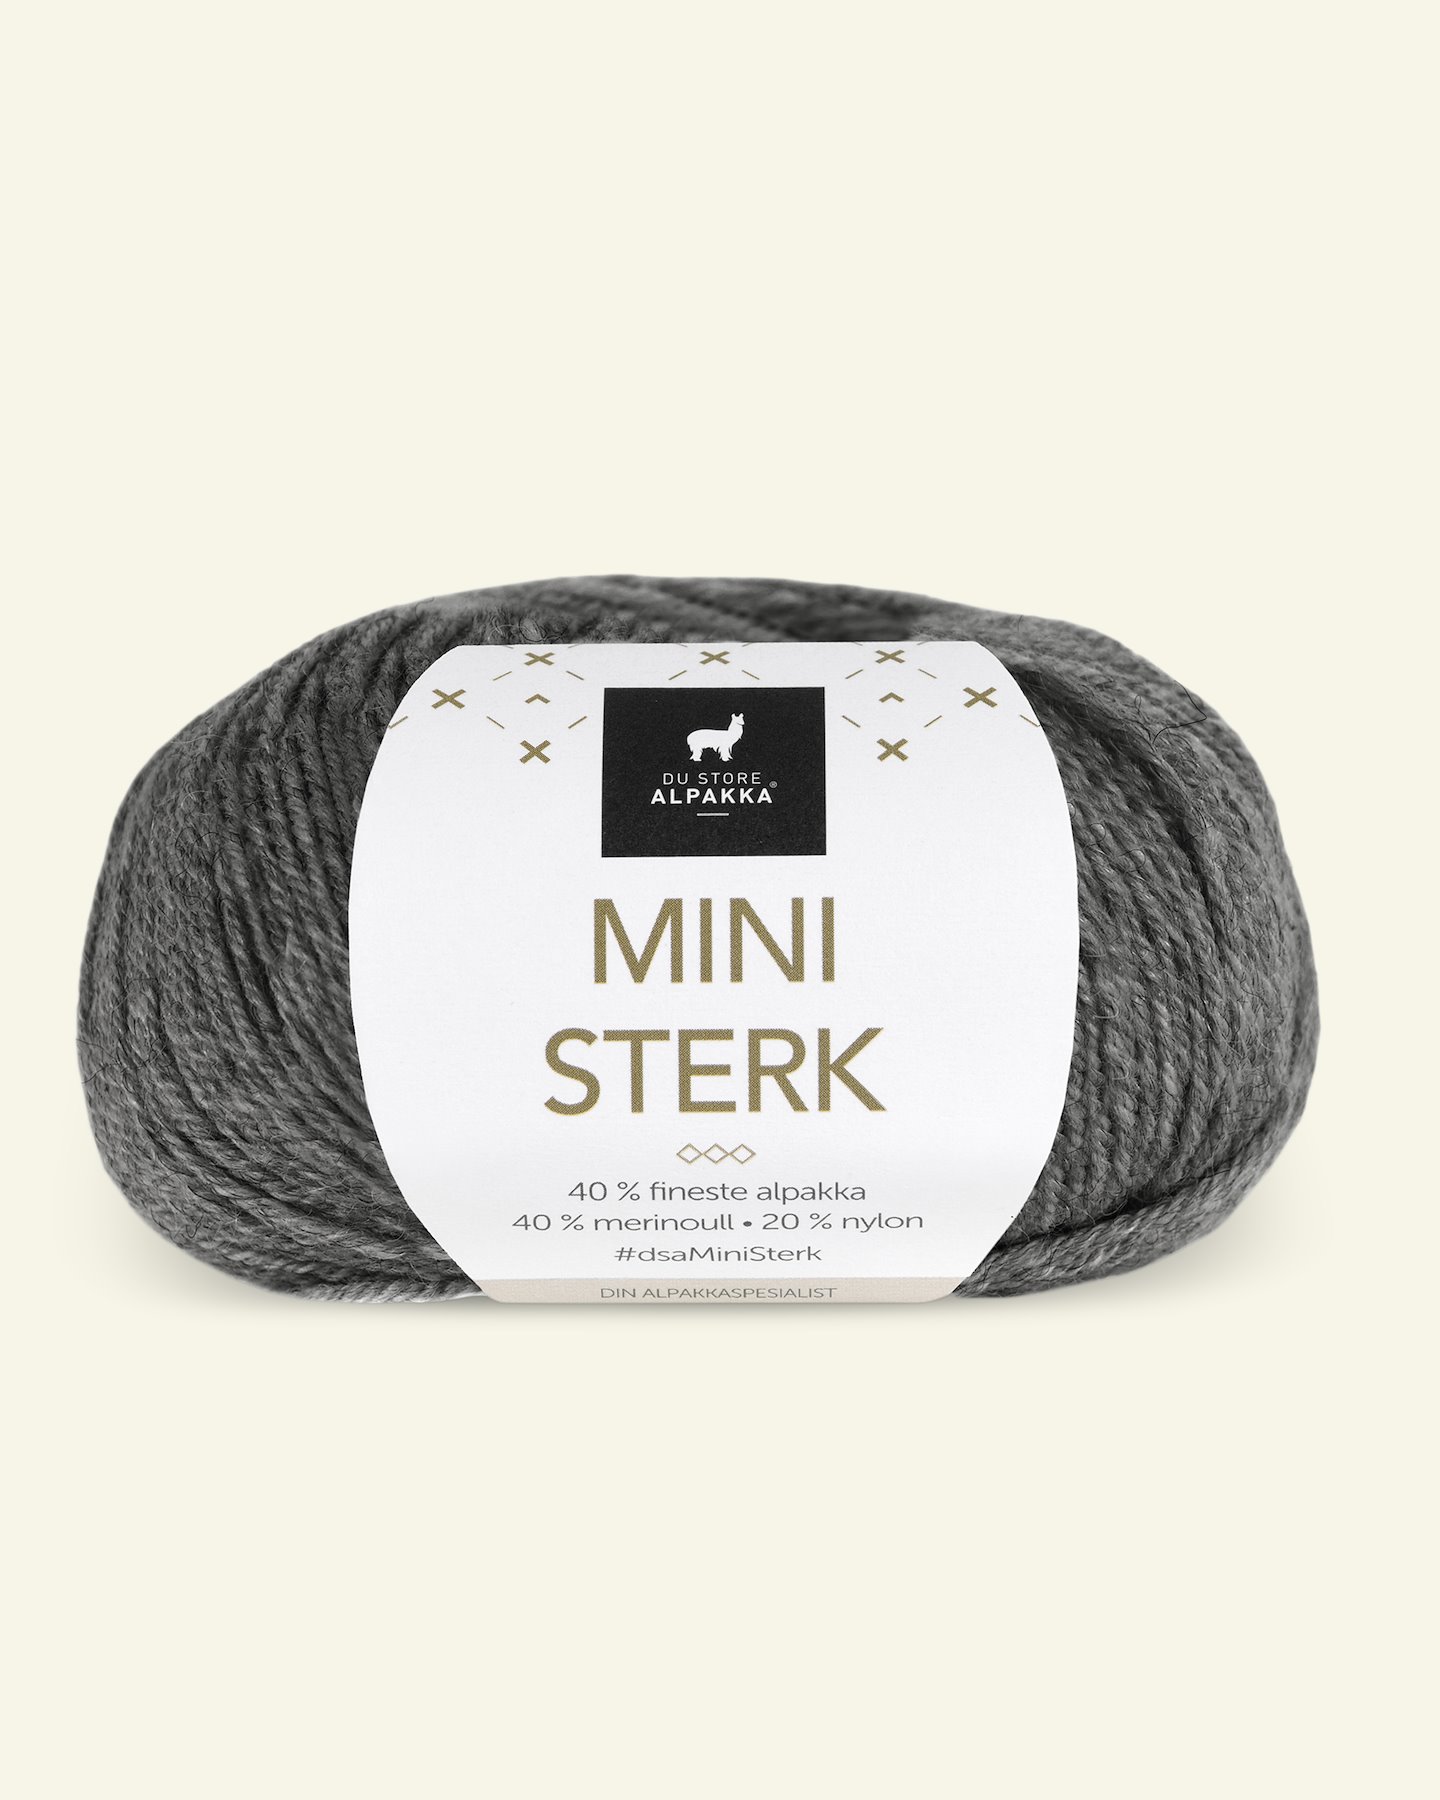 Du Store Alpakka,alpaca merino mixed yarn "Mini Sterk", charcoal mel (807) 90000622_pack